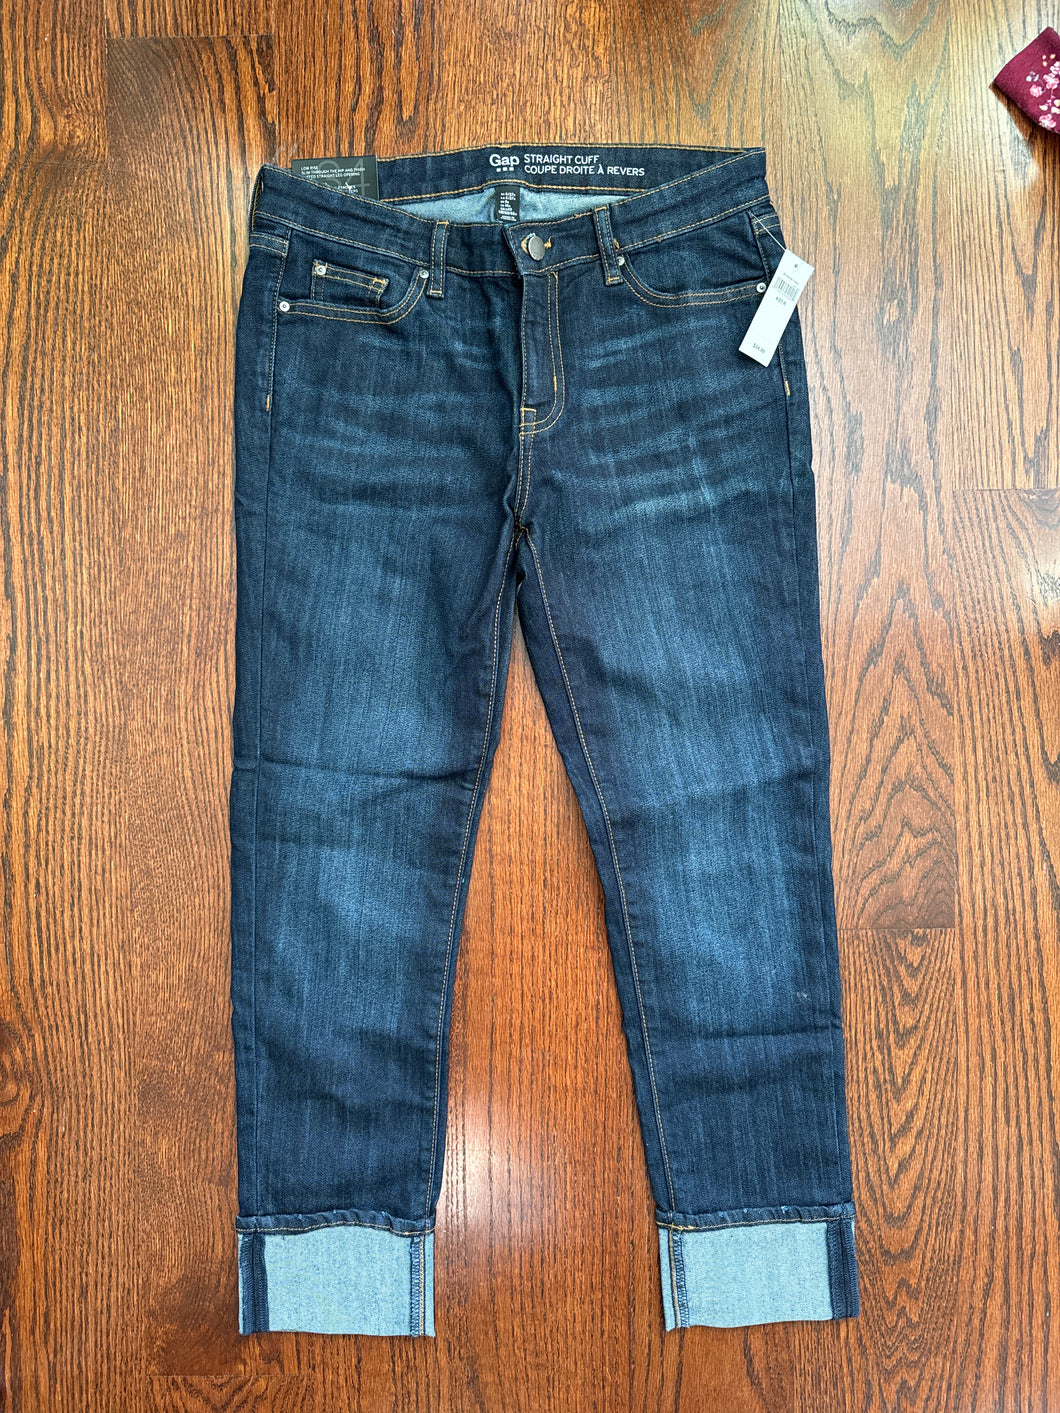 NEW Gap straight cuff jeans size 4/27 R Adult Medium